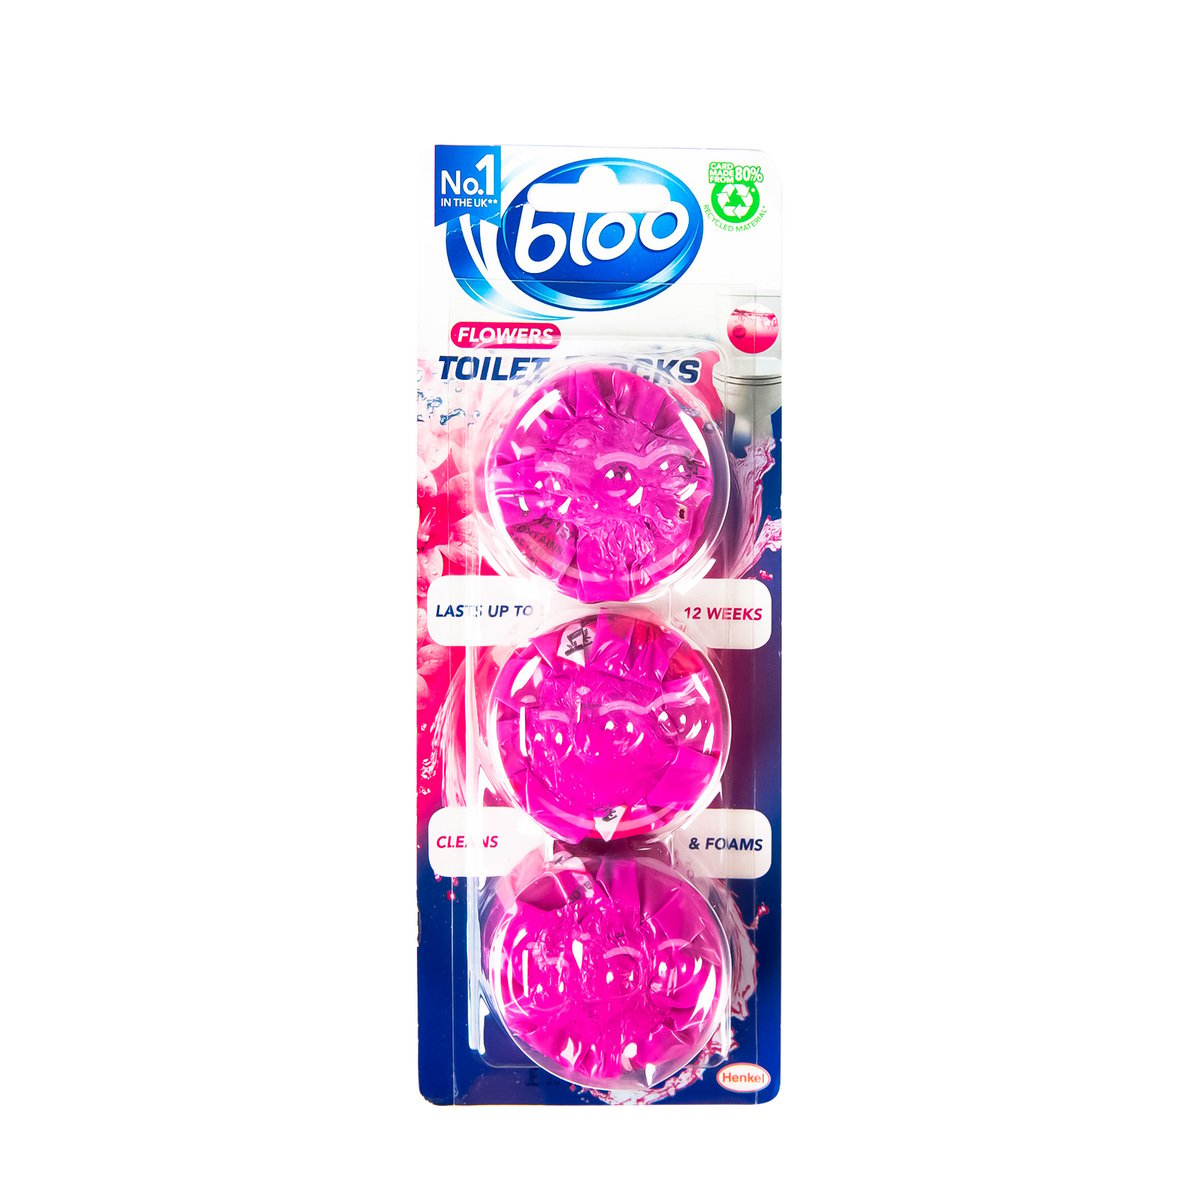 Bloo Toilet Blocks Value Pack 3 x 38g